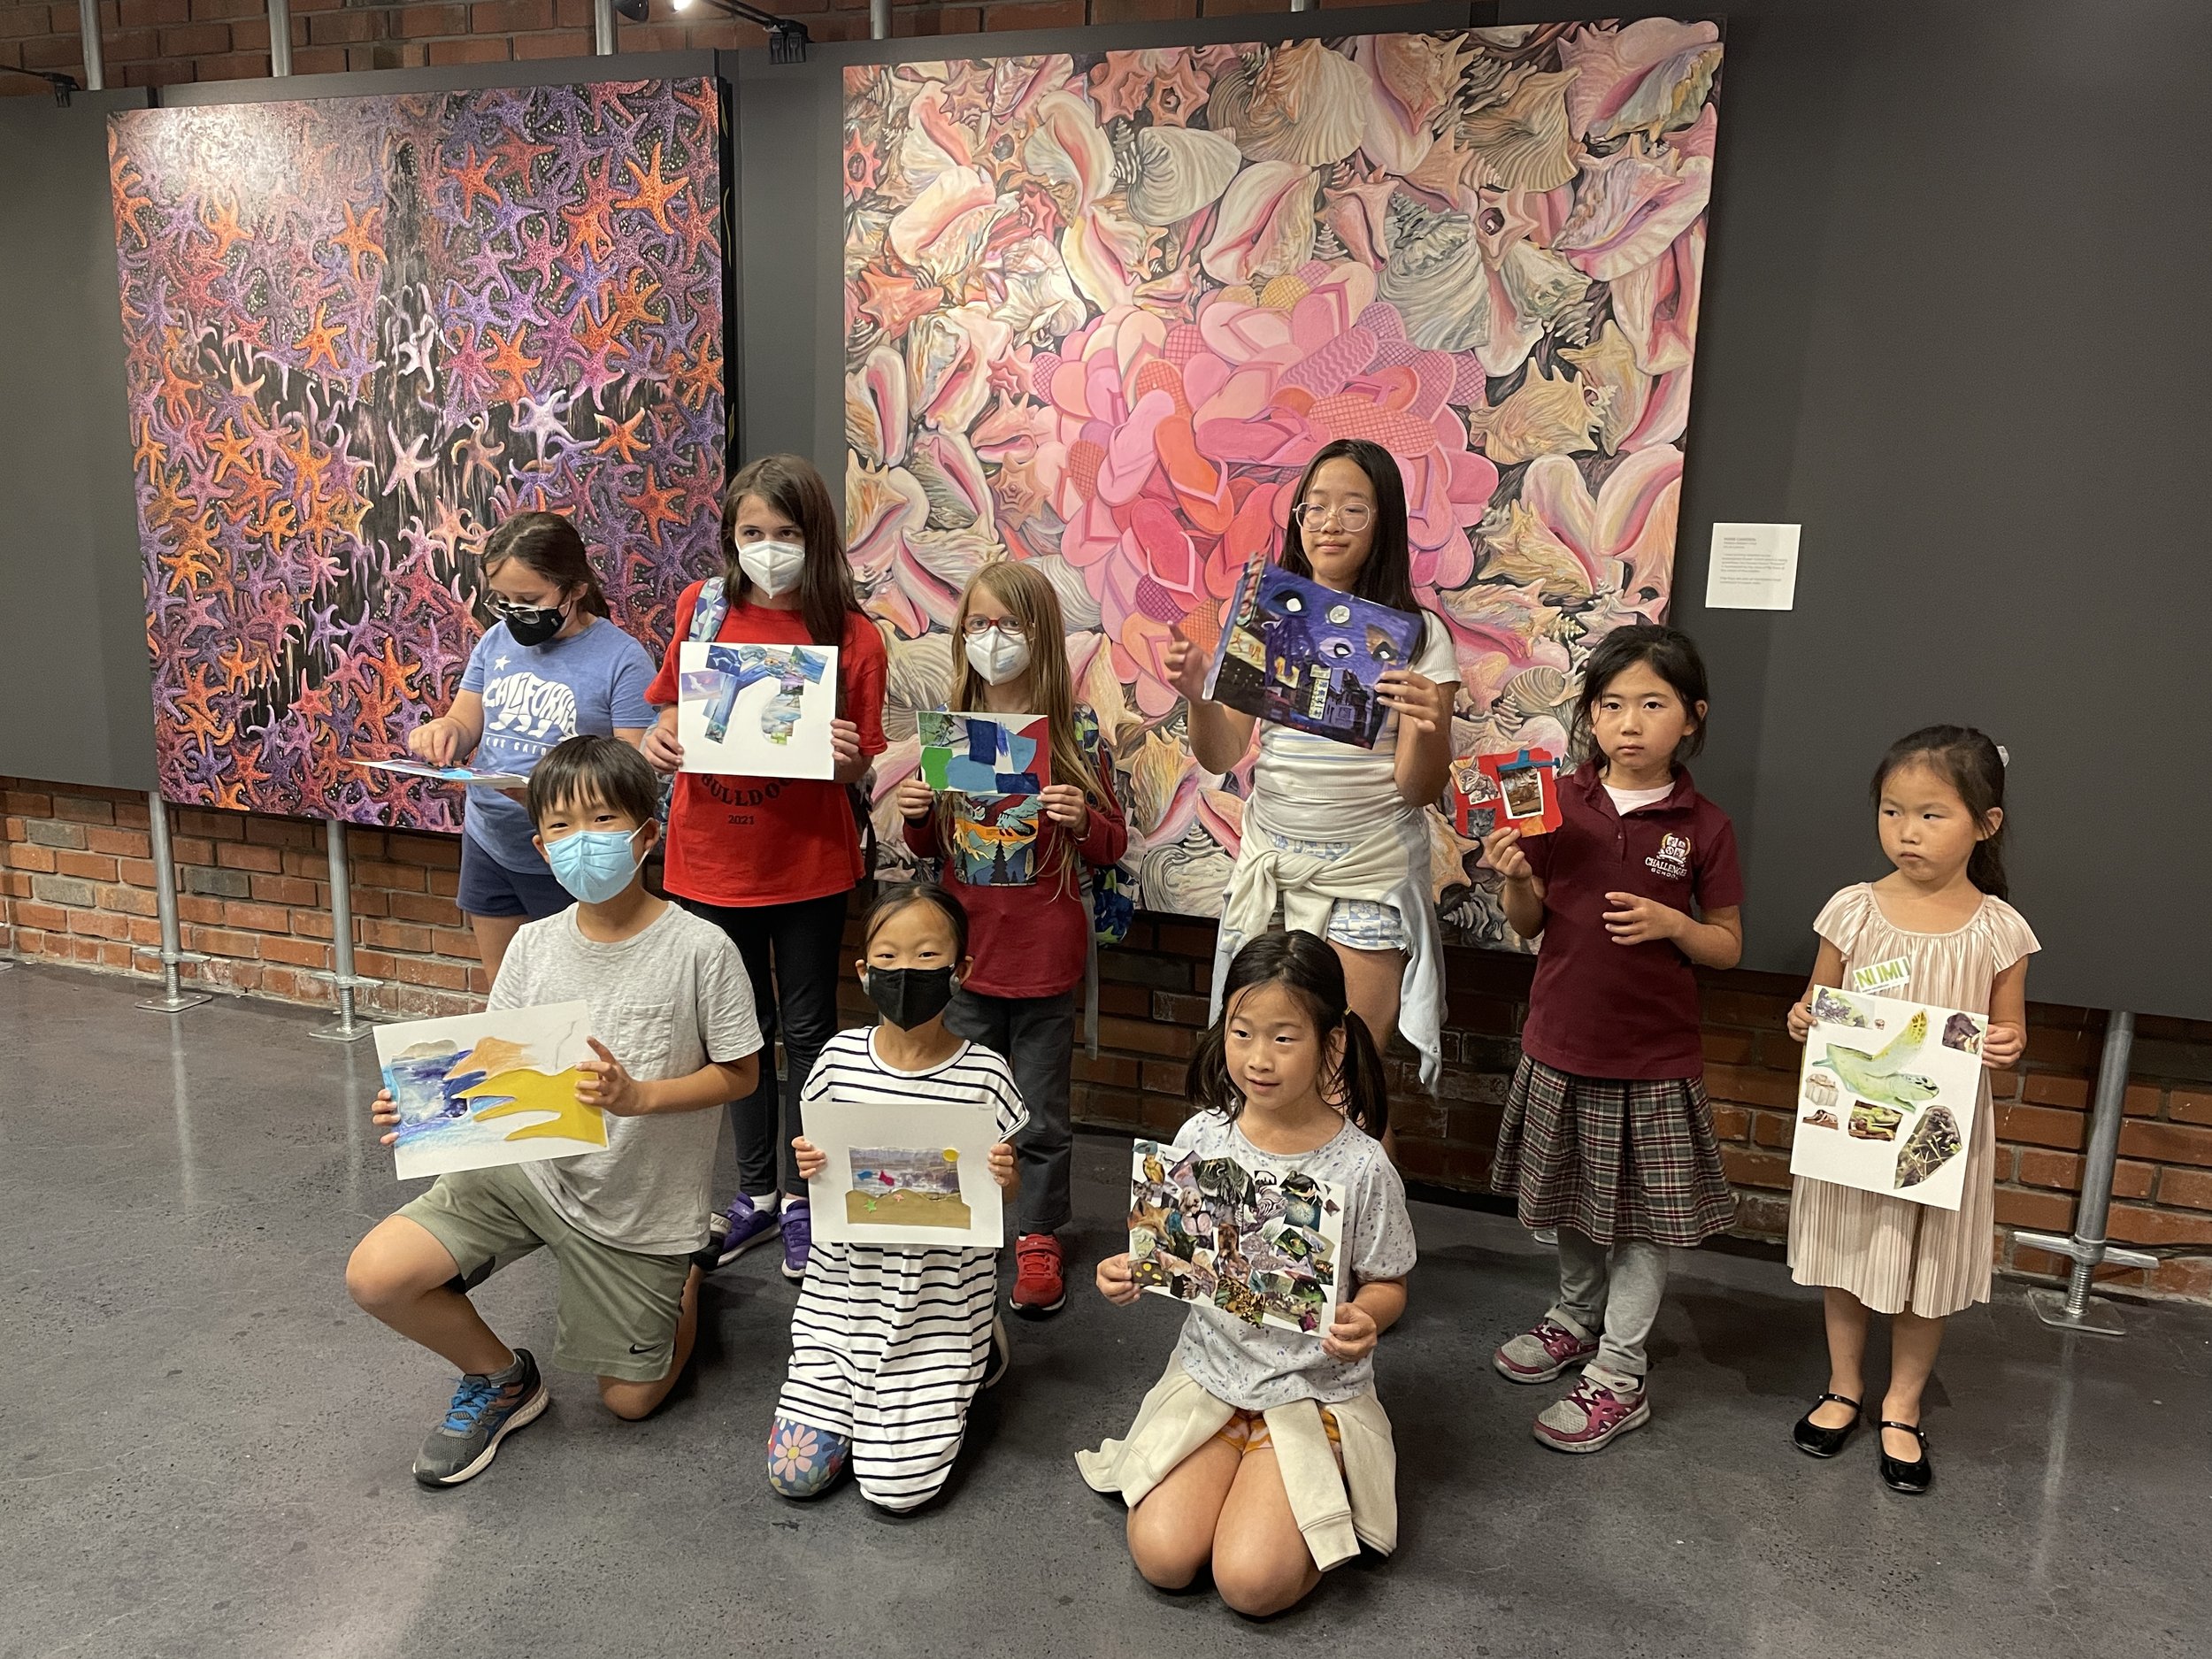 Los Gatos teen raised $900, donated 110 art kits to children's